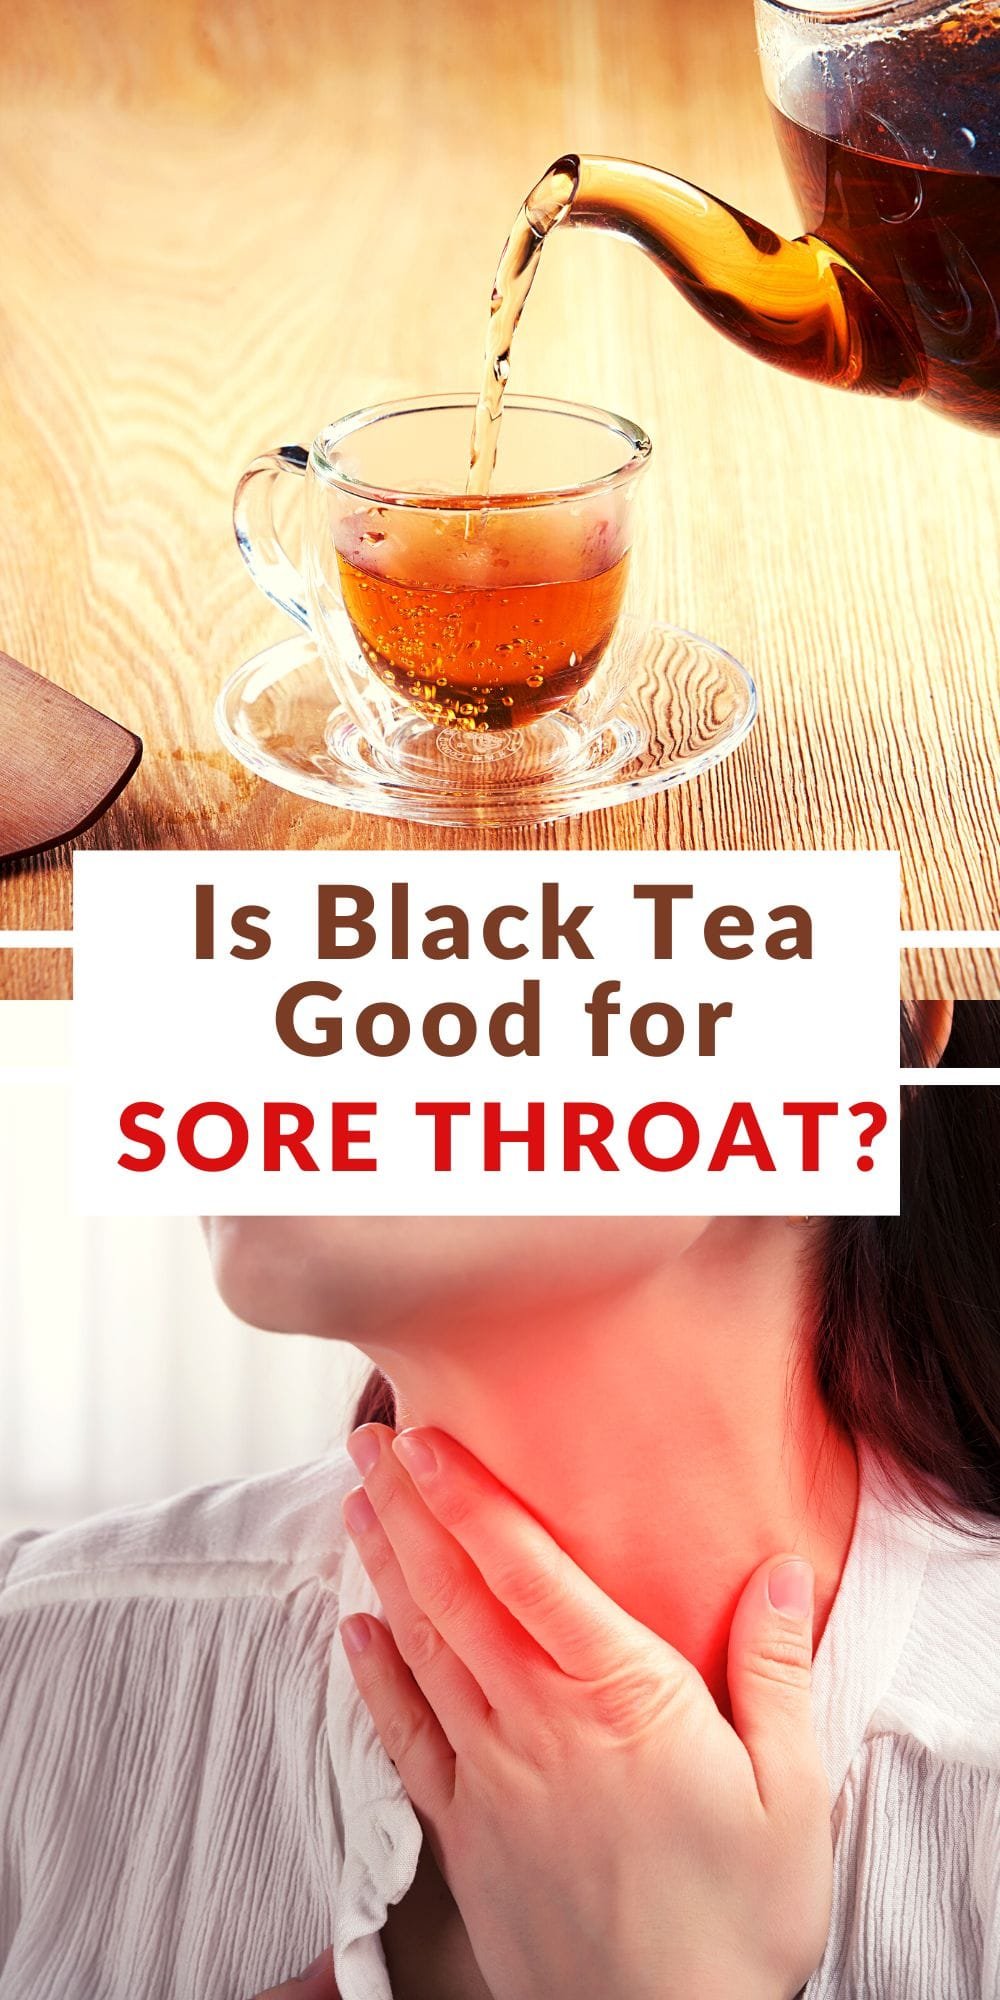 Black Tea for Sore Throat